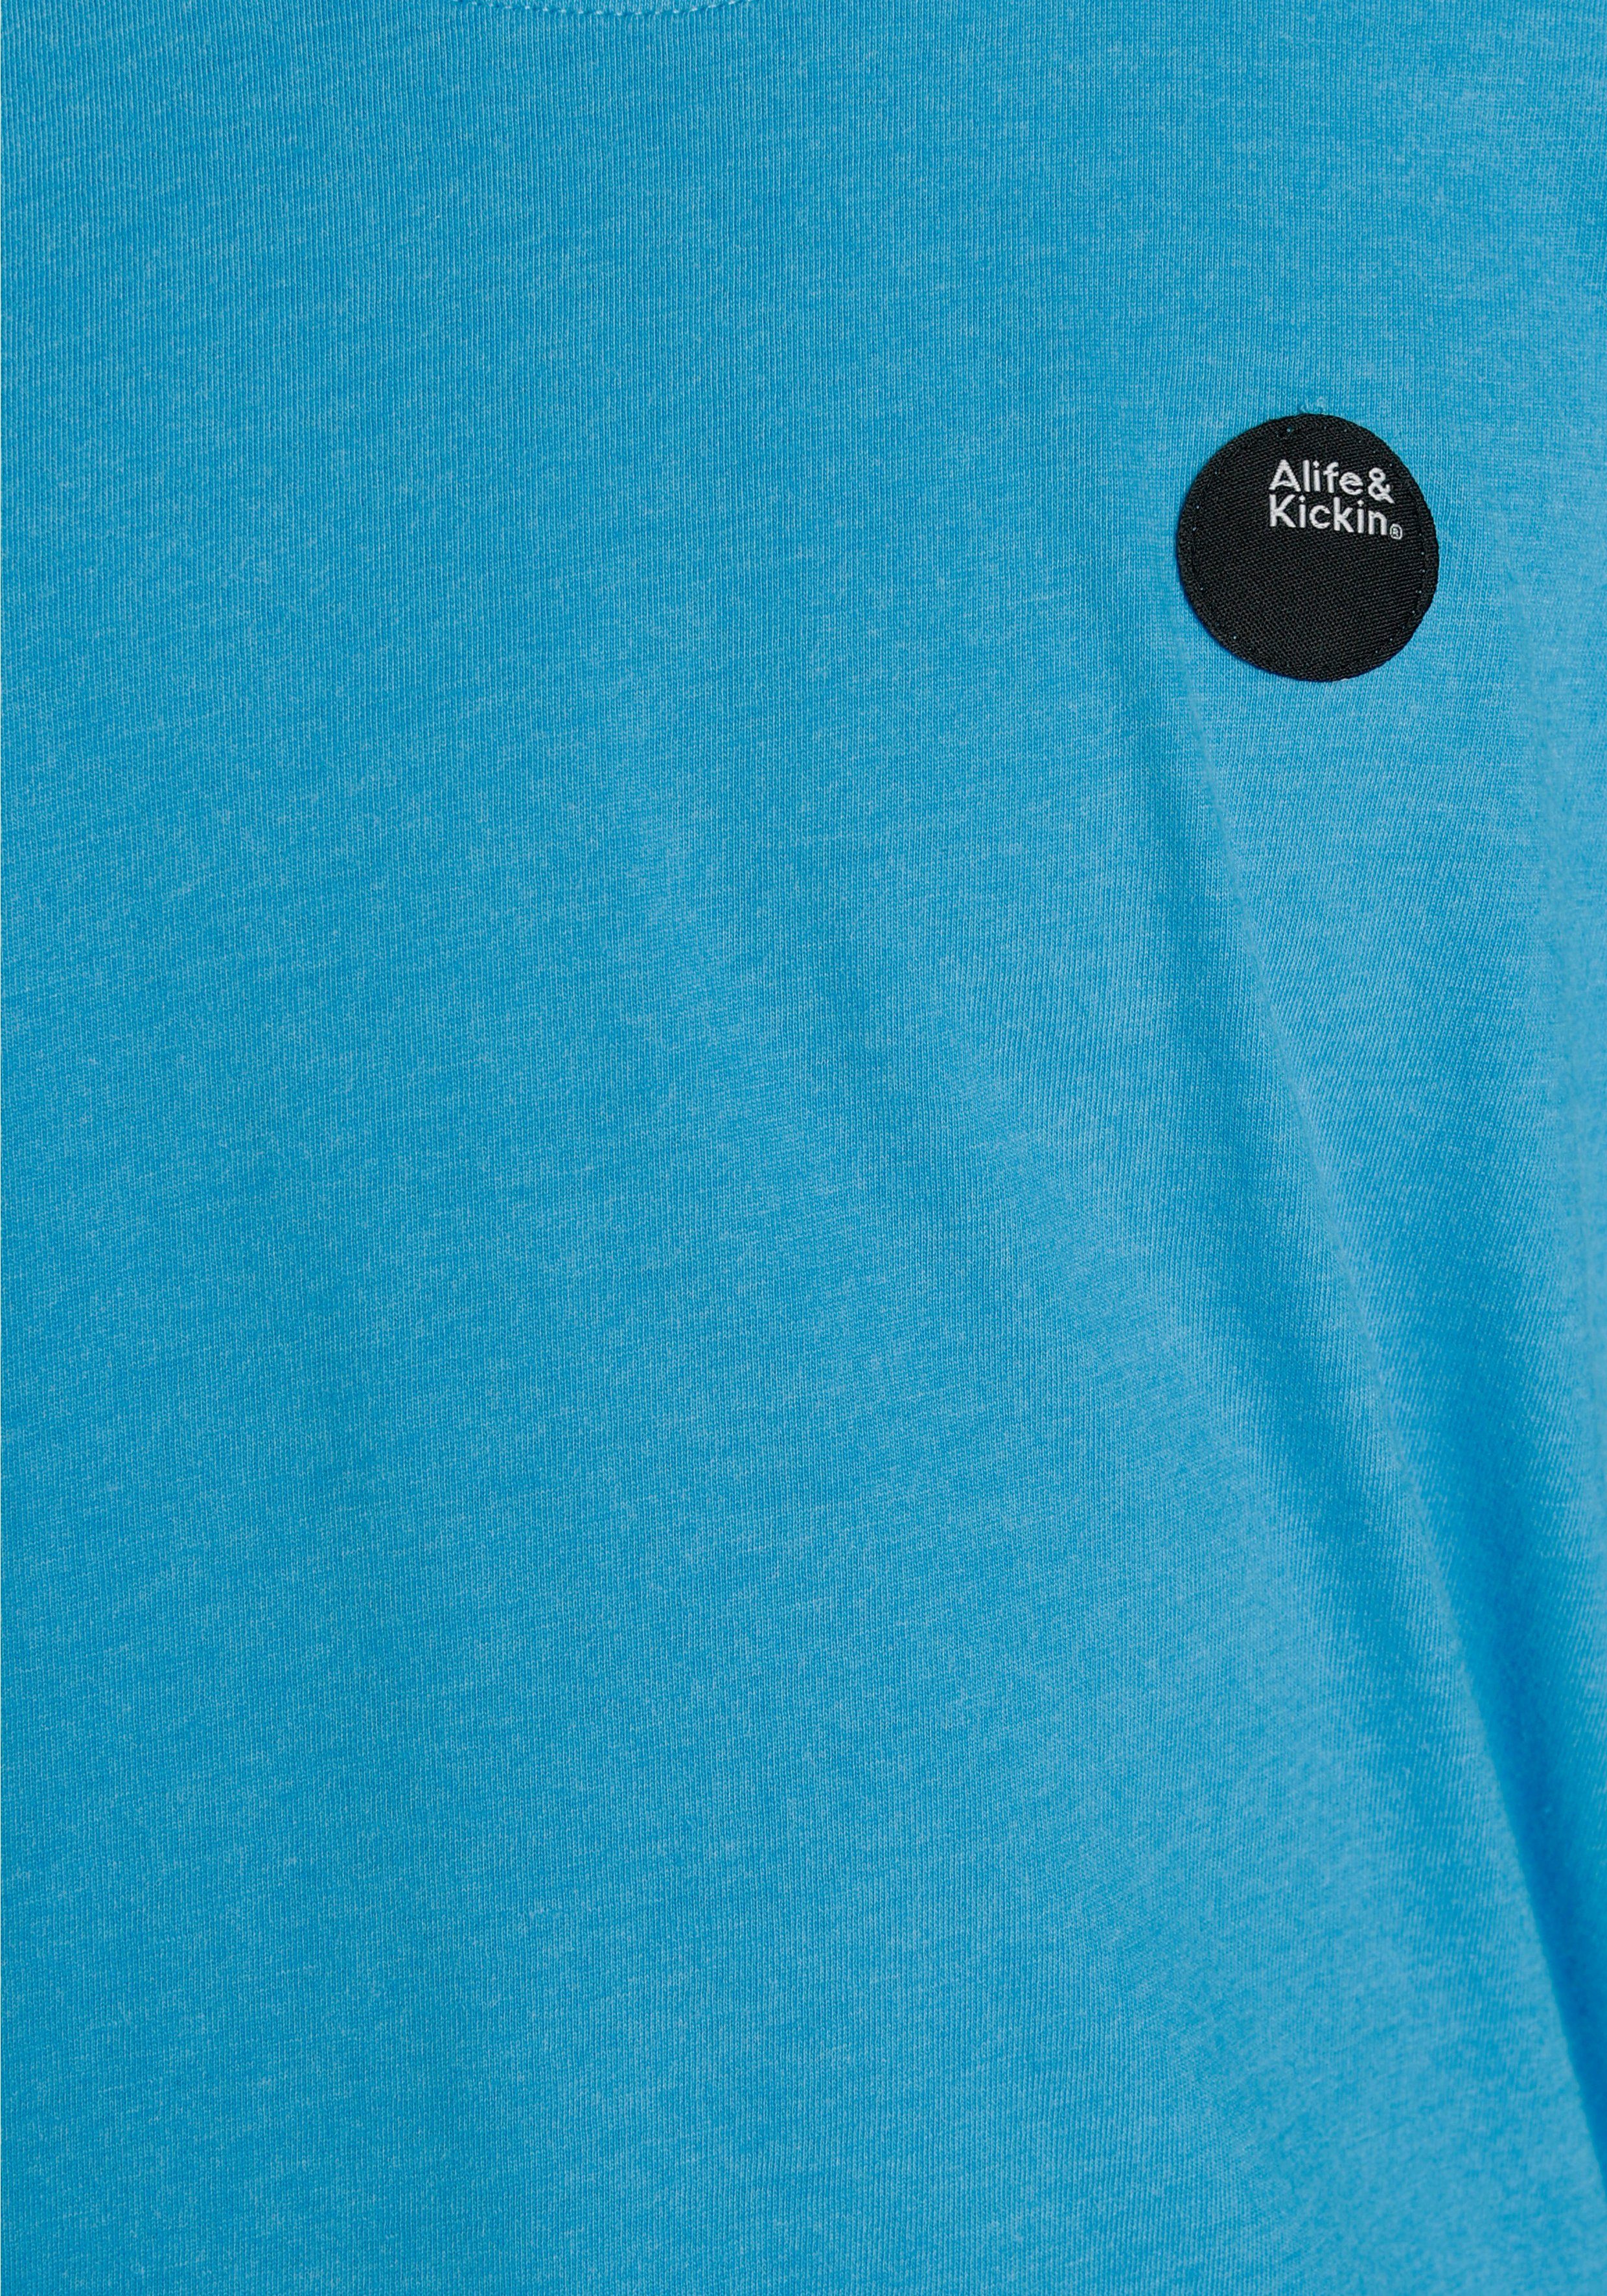 Langarmshirt Logo-Print Alife Qualität Kickin & melierter in